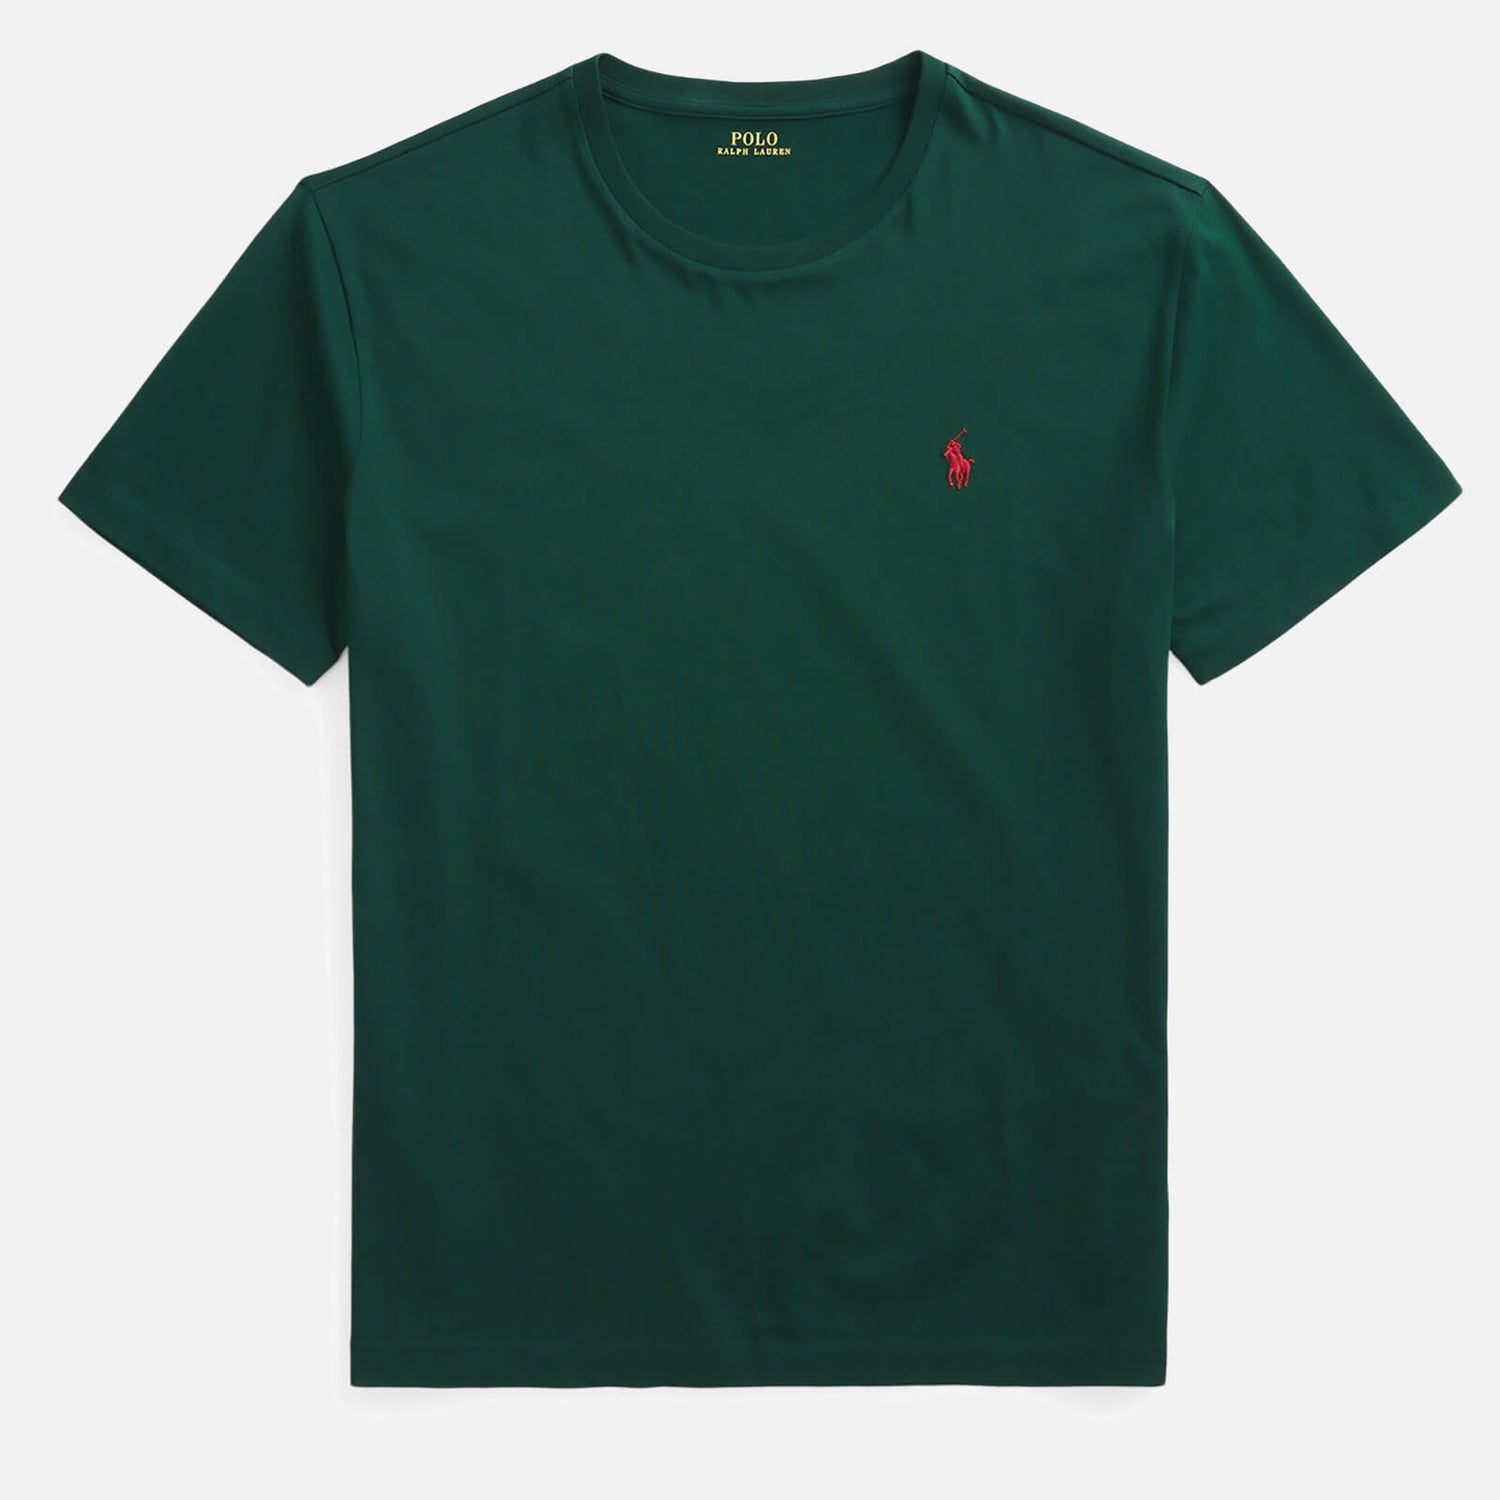 Polo Ralph Lauren Men's Custom Fit Jersey T-Shirt - College Green - S